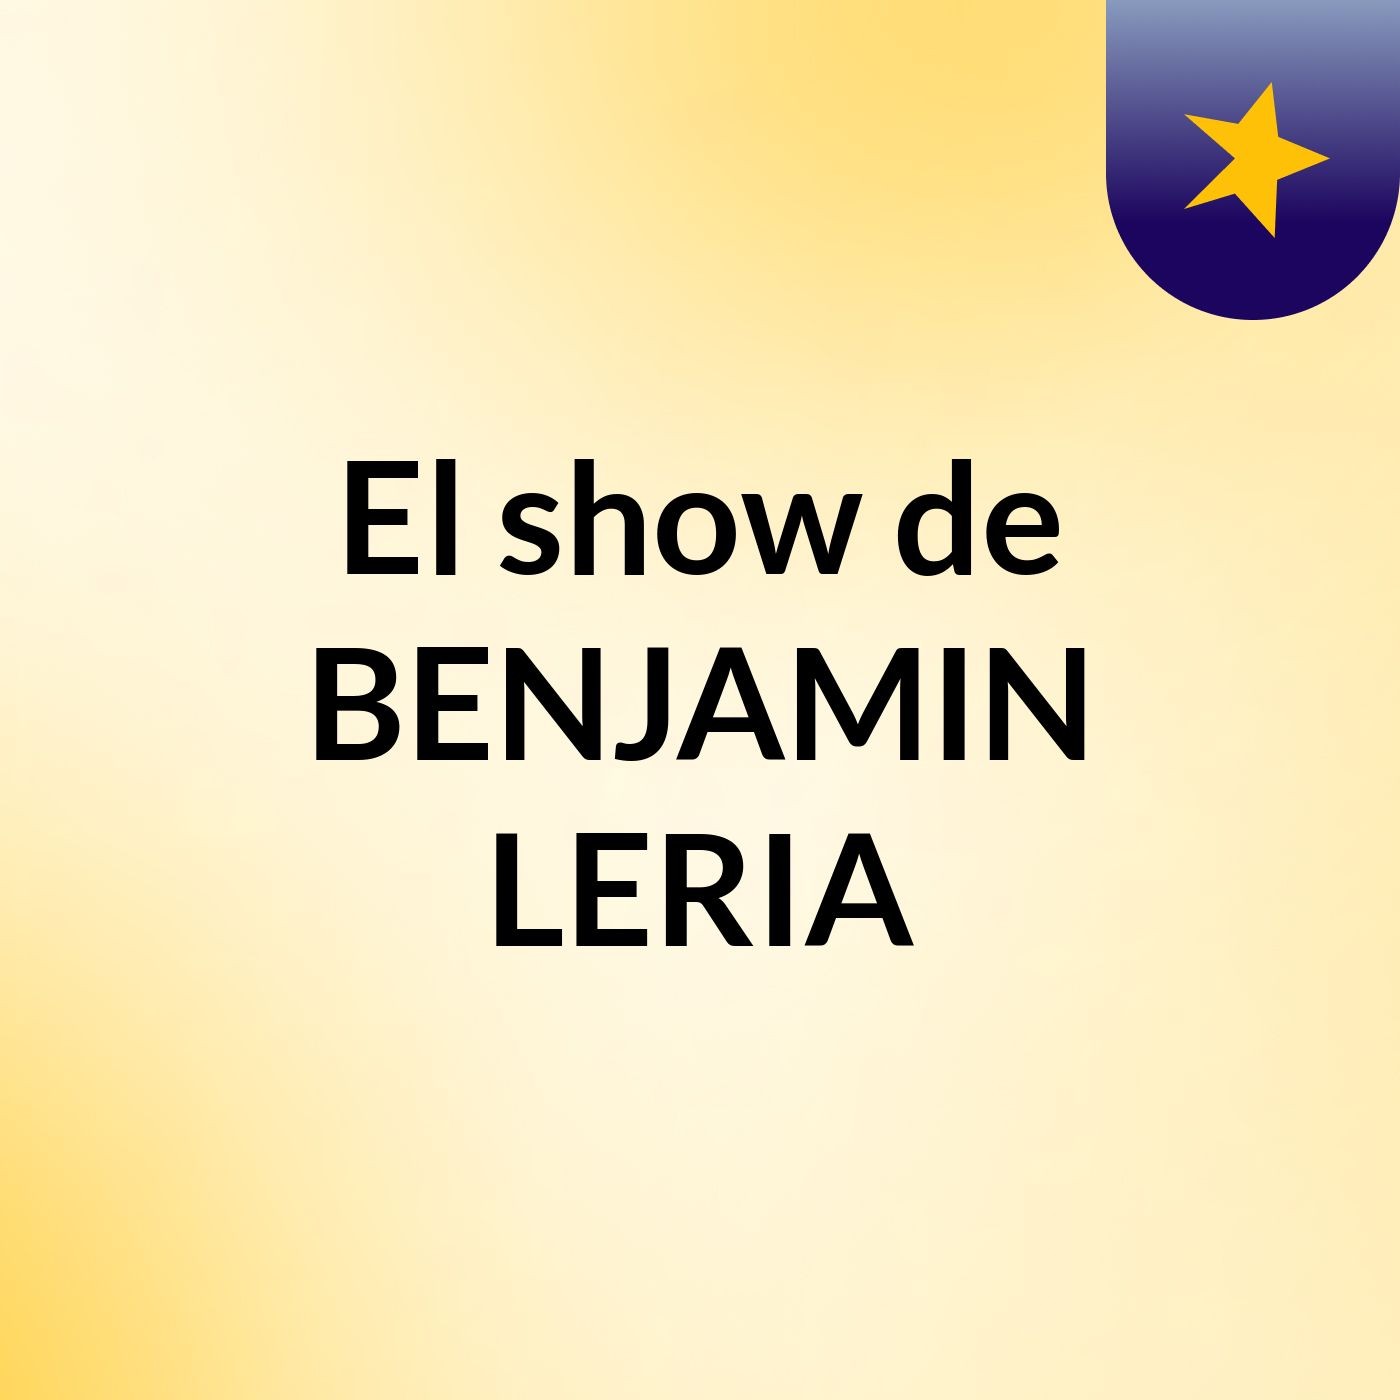 El show de BENJAMIN LERIA